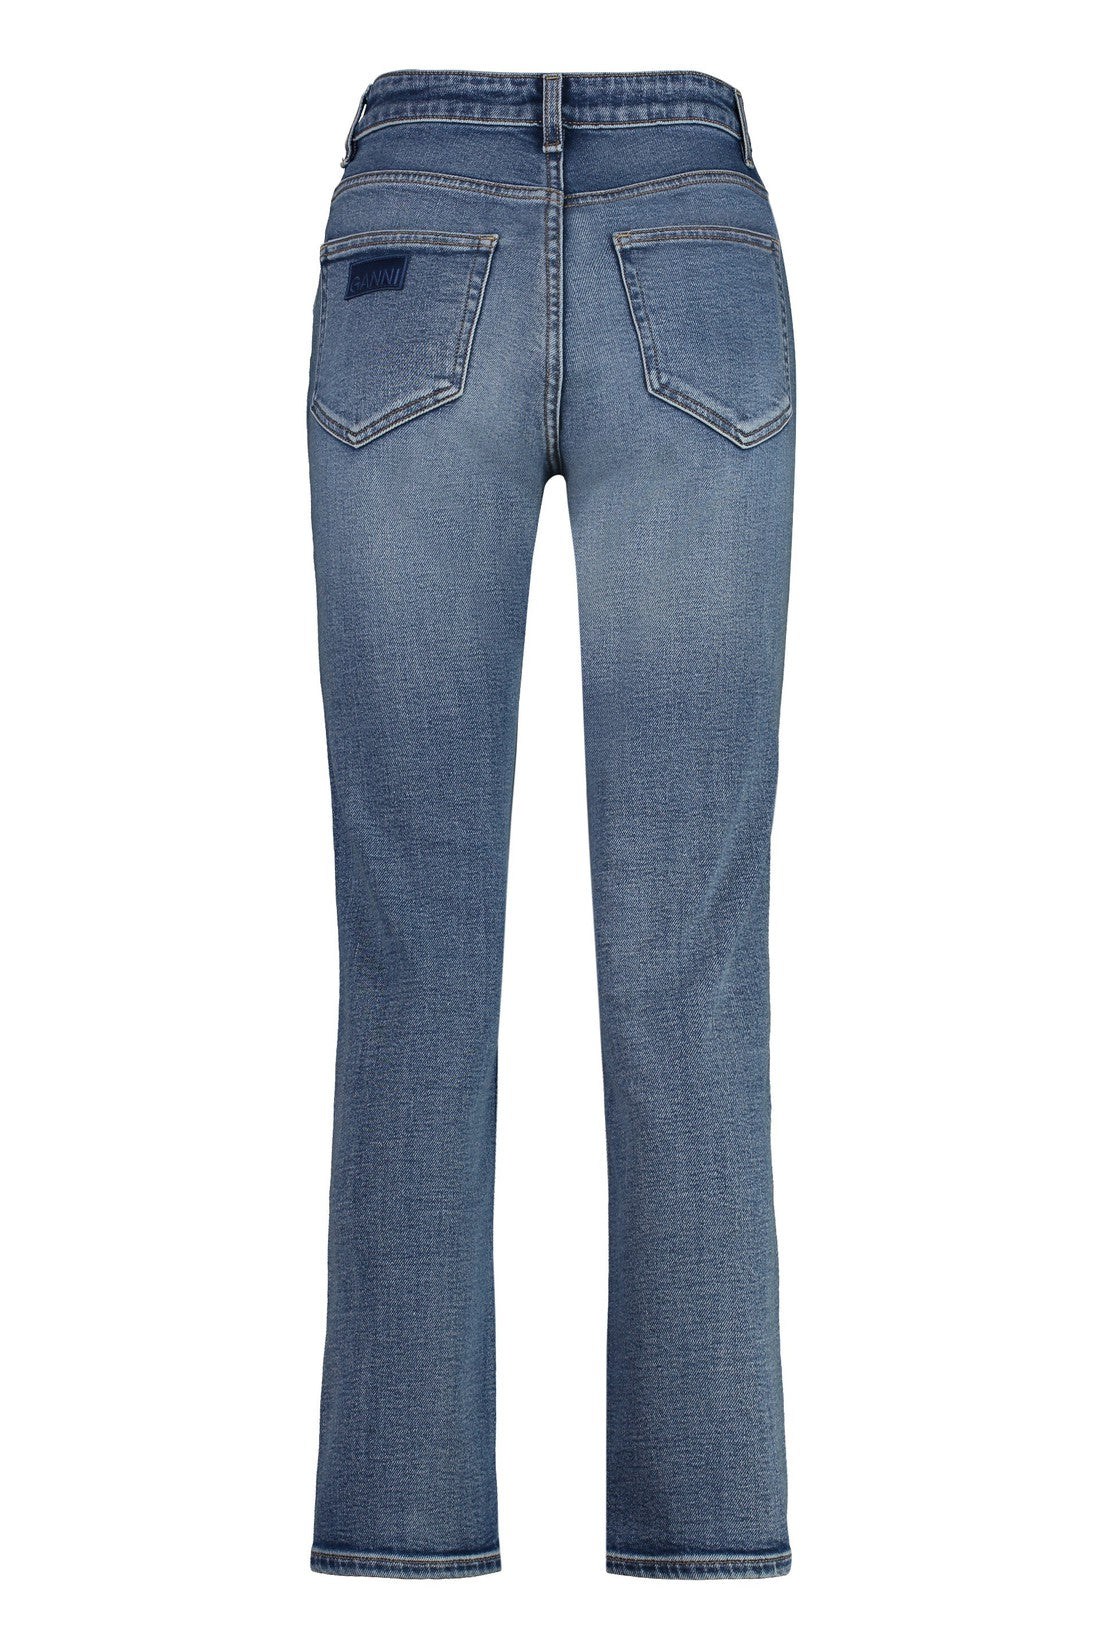 GANNI-OUTLET-SALE-Cutye High-rise slim fit jeans-ARCHIVIST